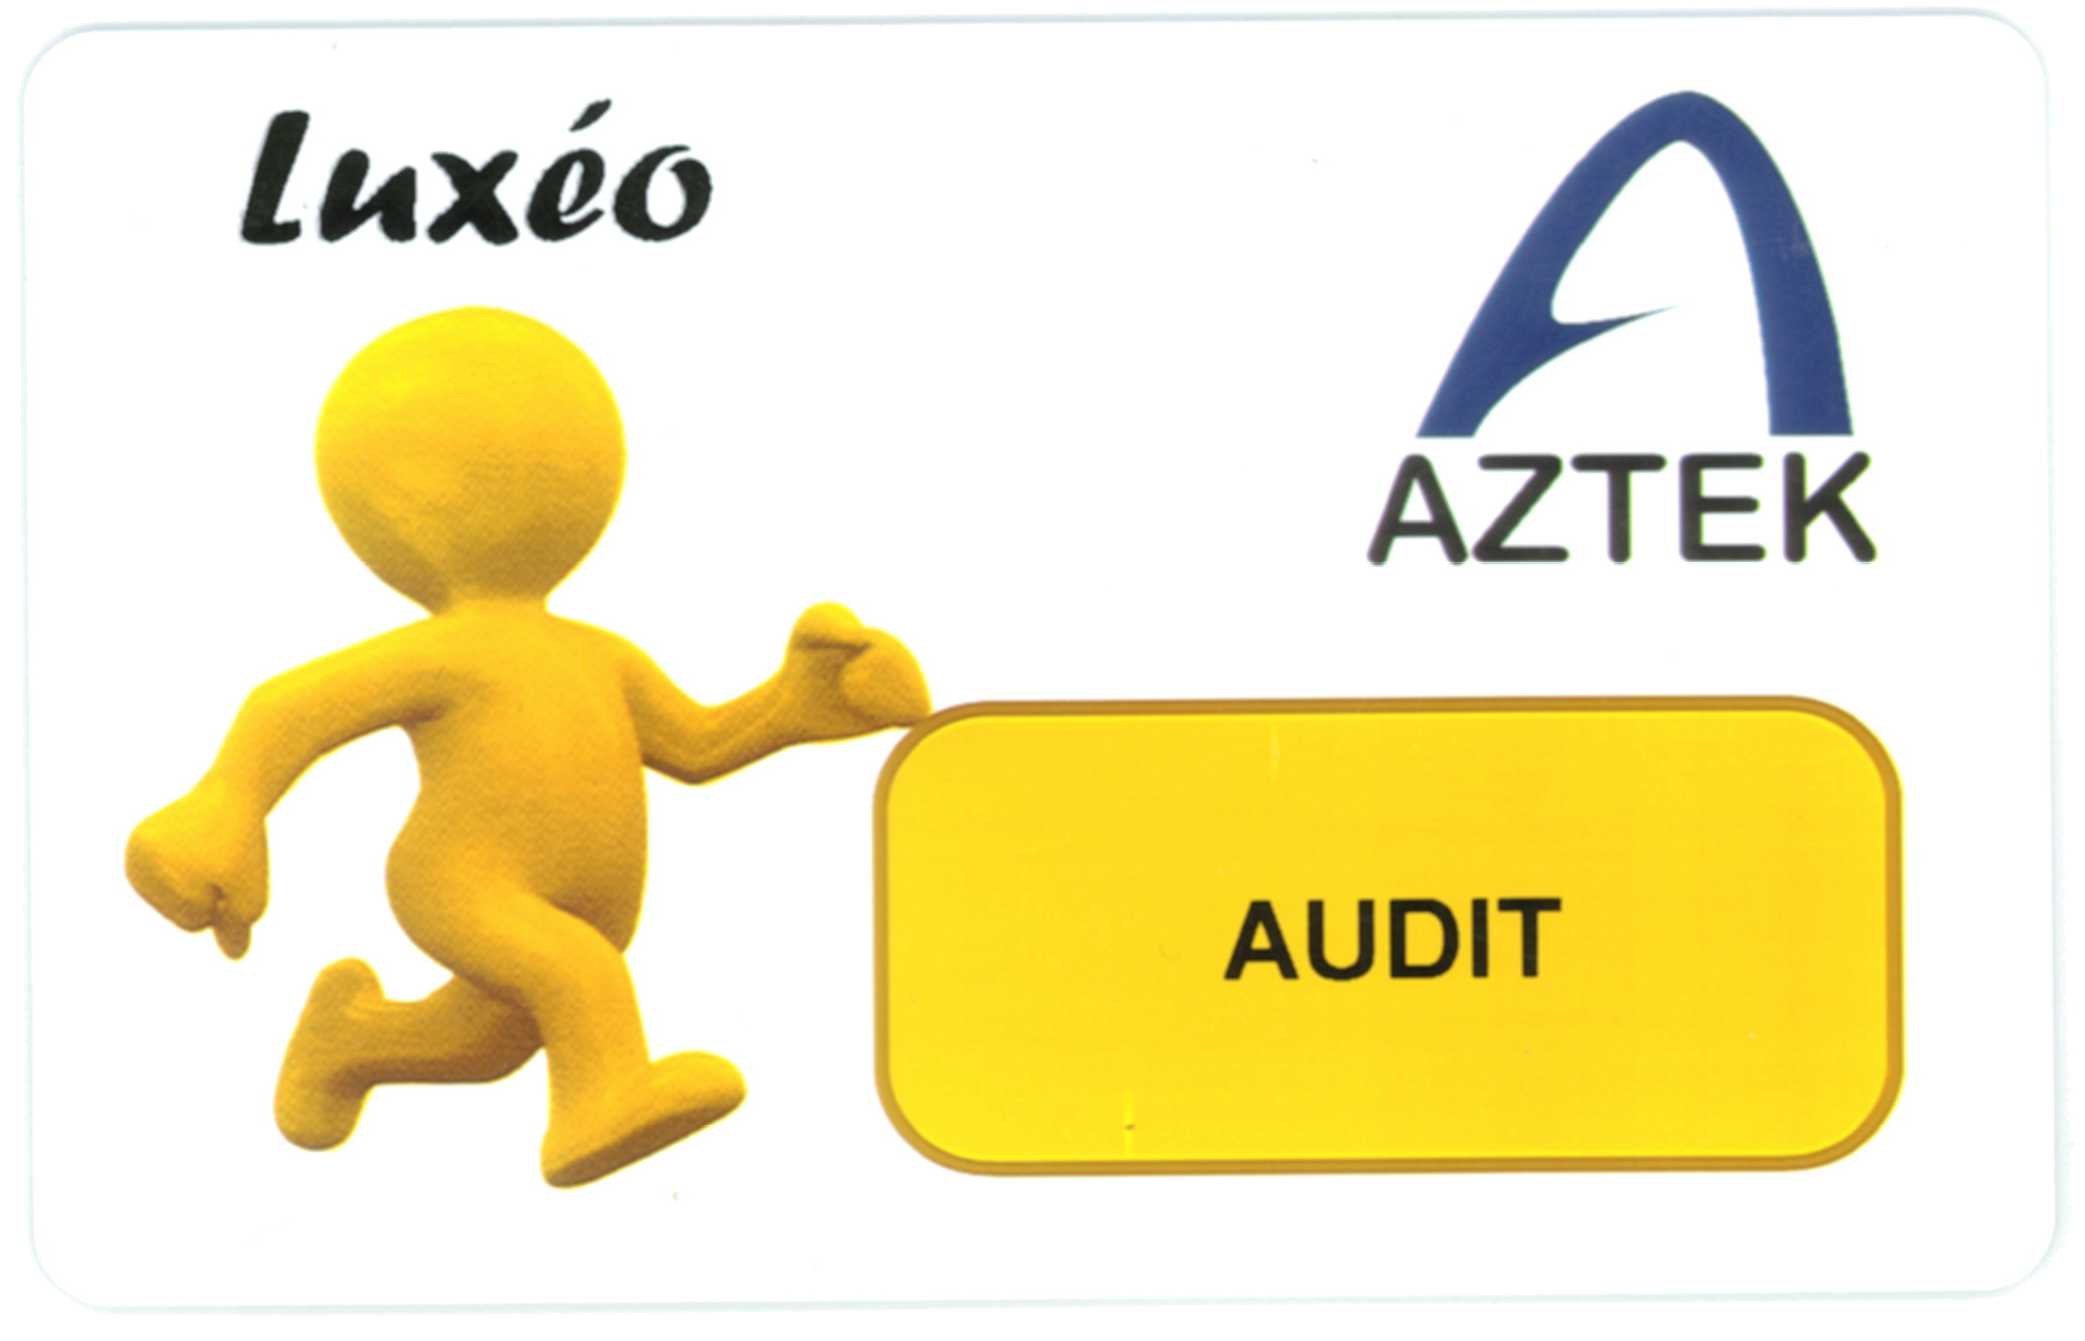 AZTEK Audit Card